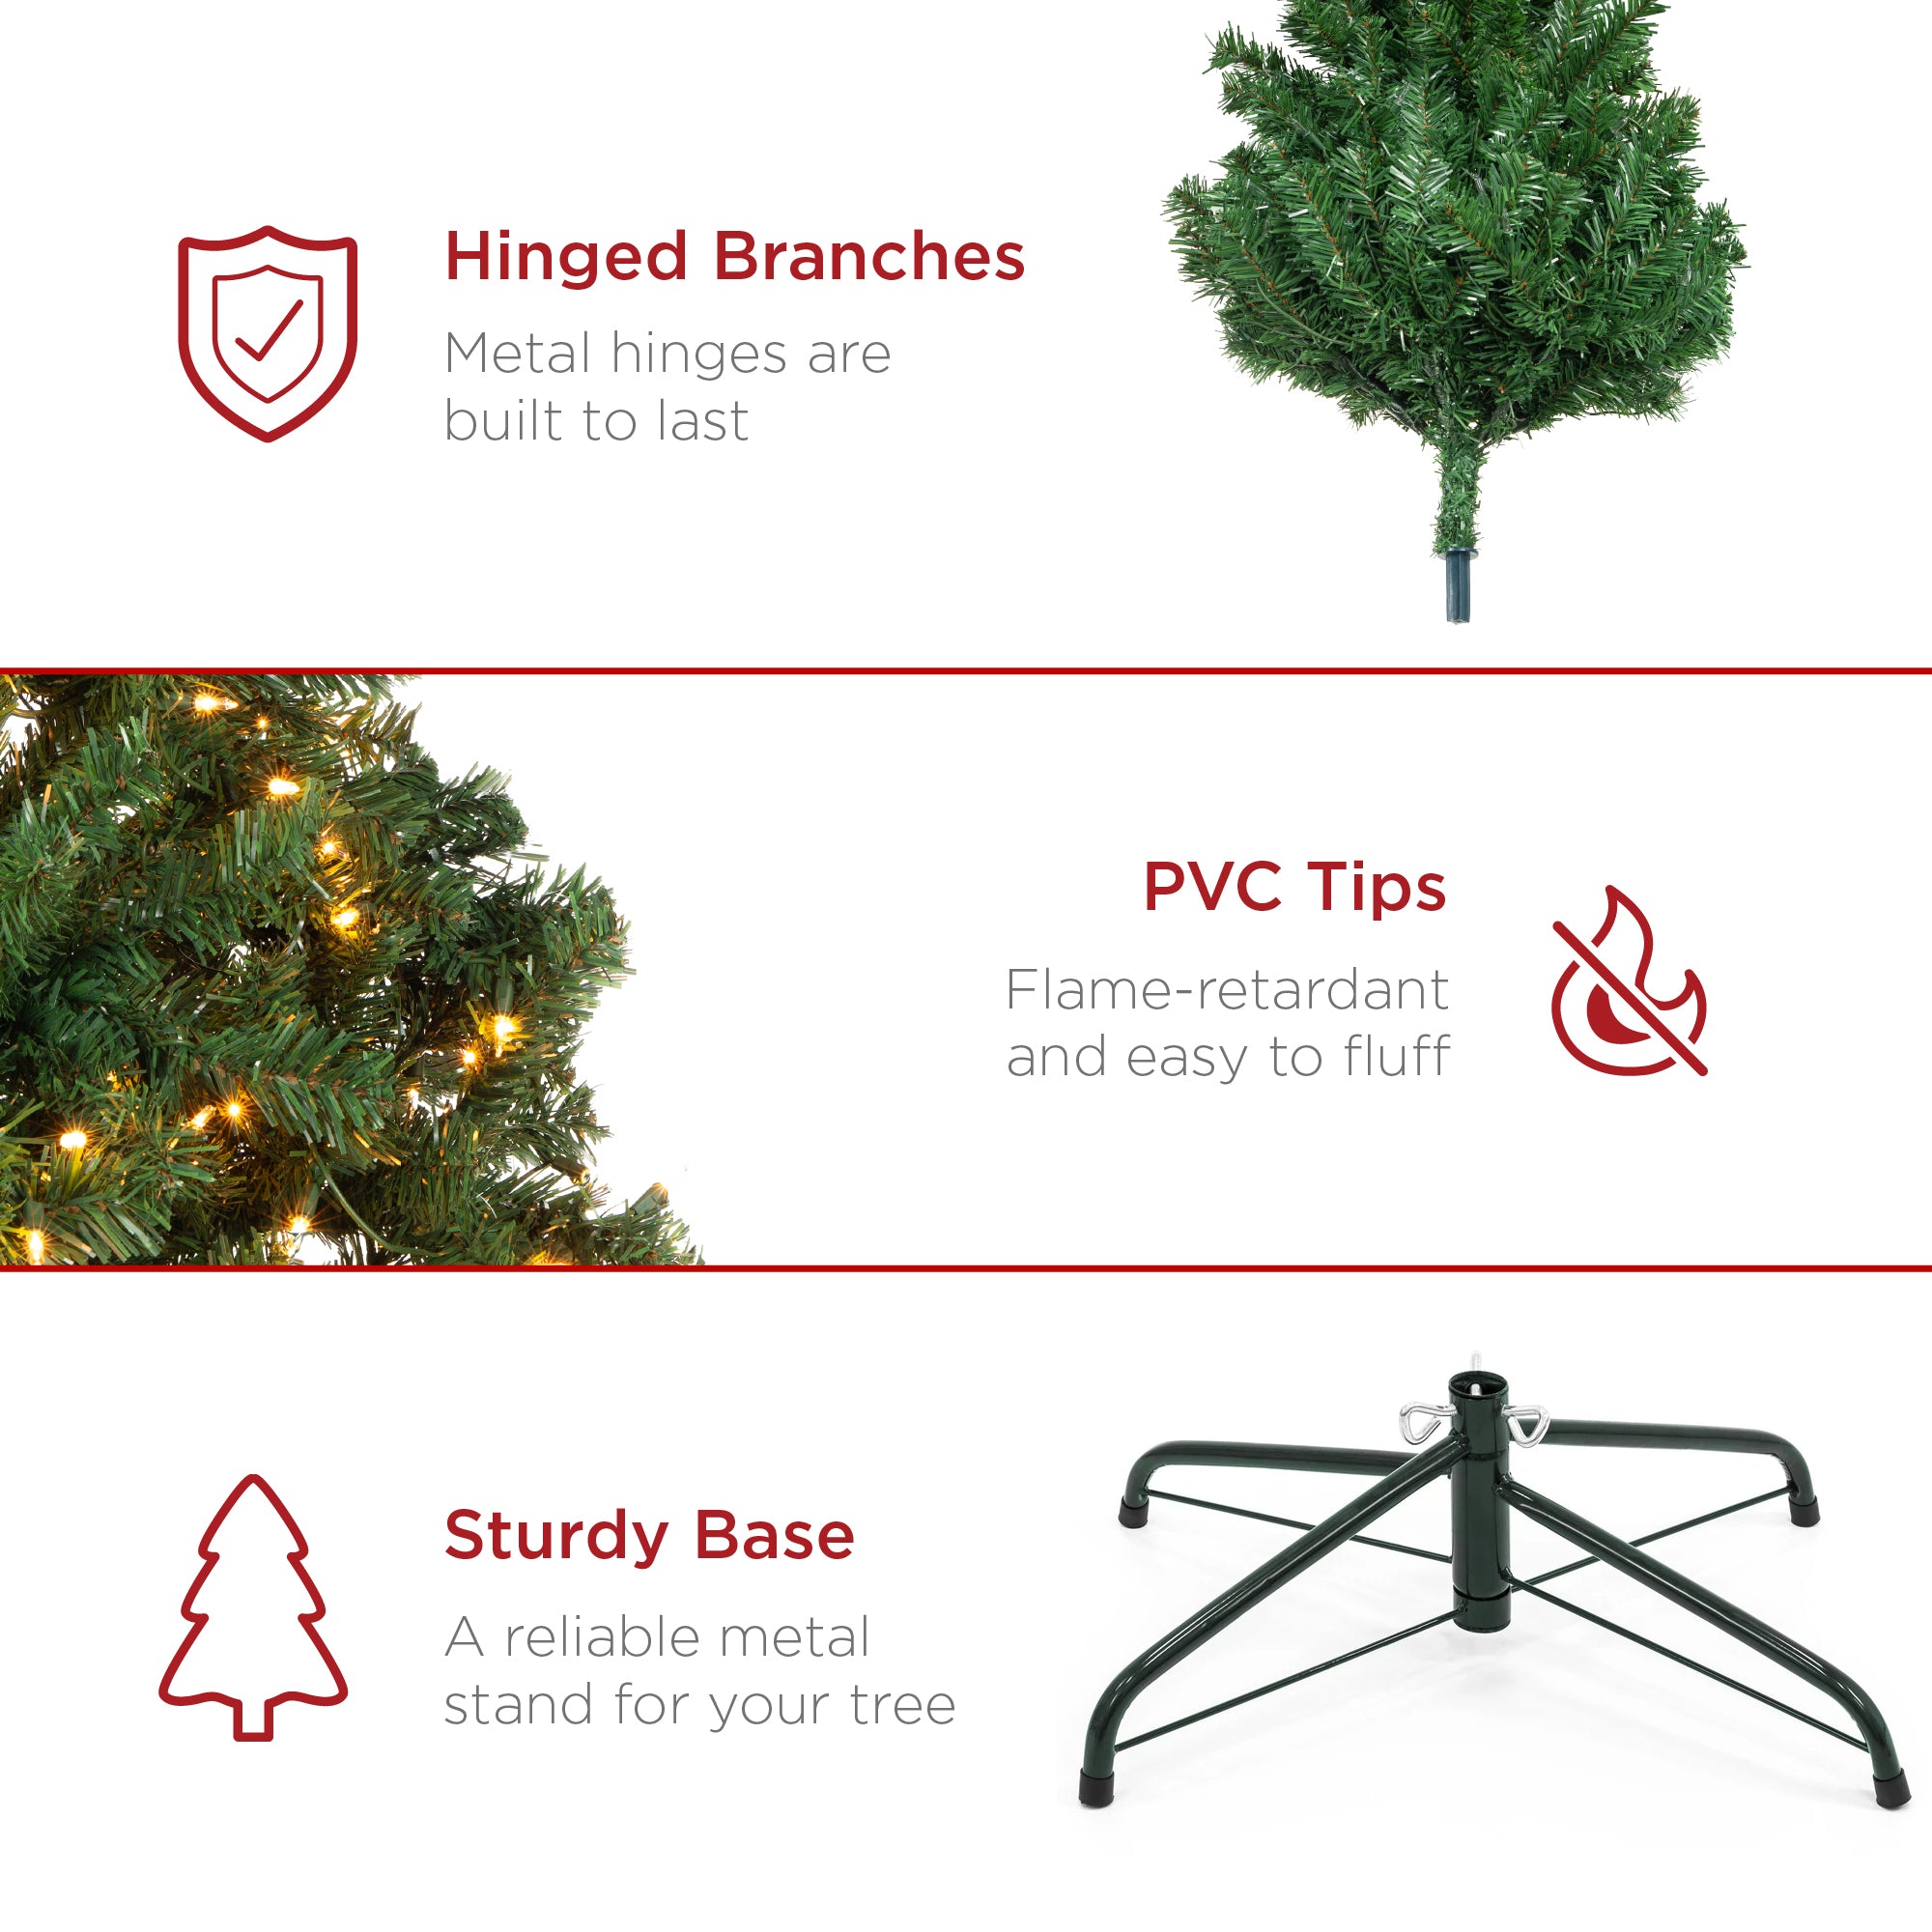 Pre-Lit Artificial Spruce Christmas Tree w/ Foldable Metal Base